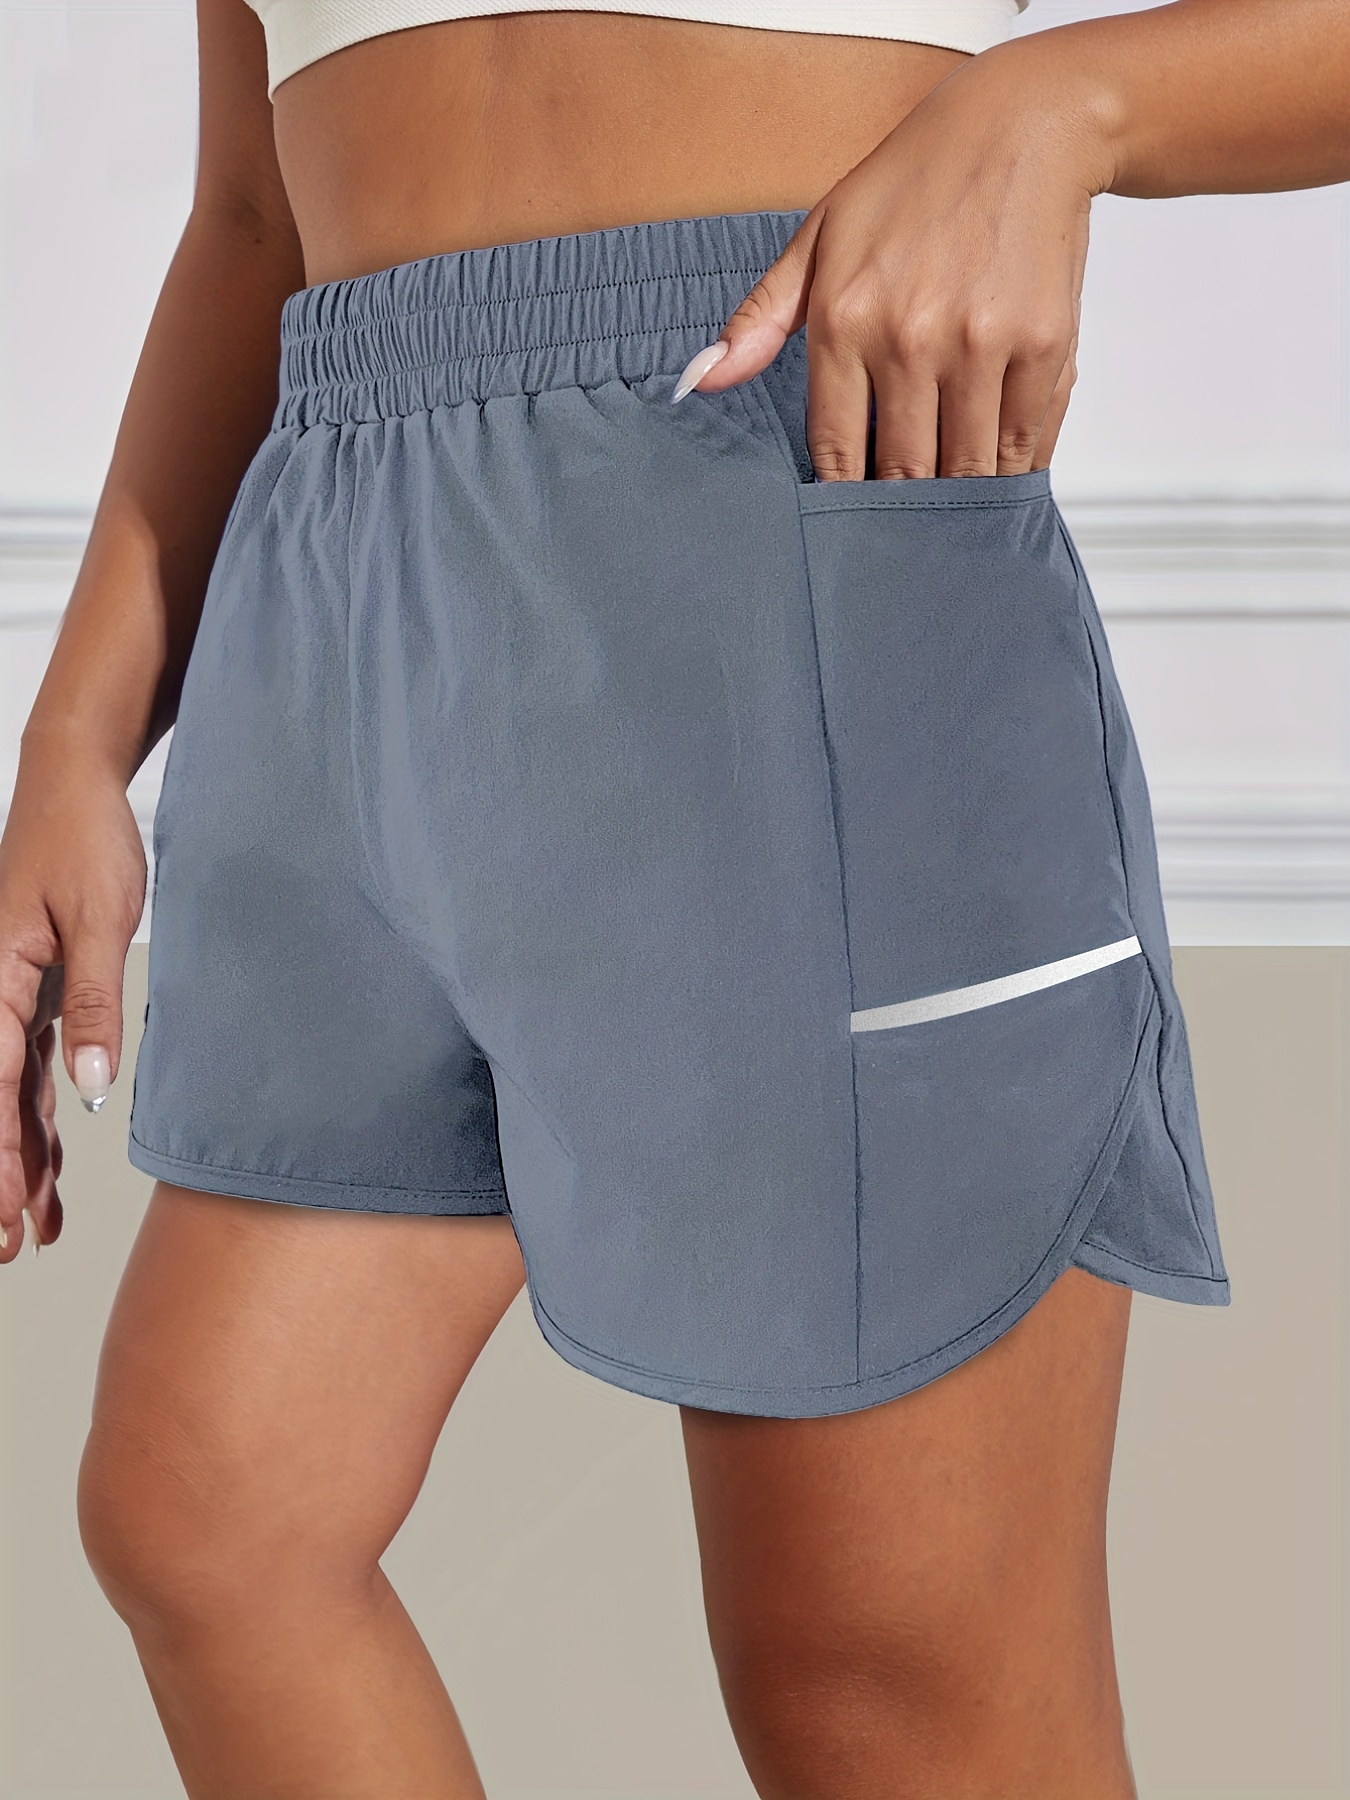 Tawop Qqq Shorts Casual Elastic Pants Leggings Pocket Loose Shorts Tailored  Shorts For Women Gray Size 6 